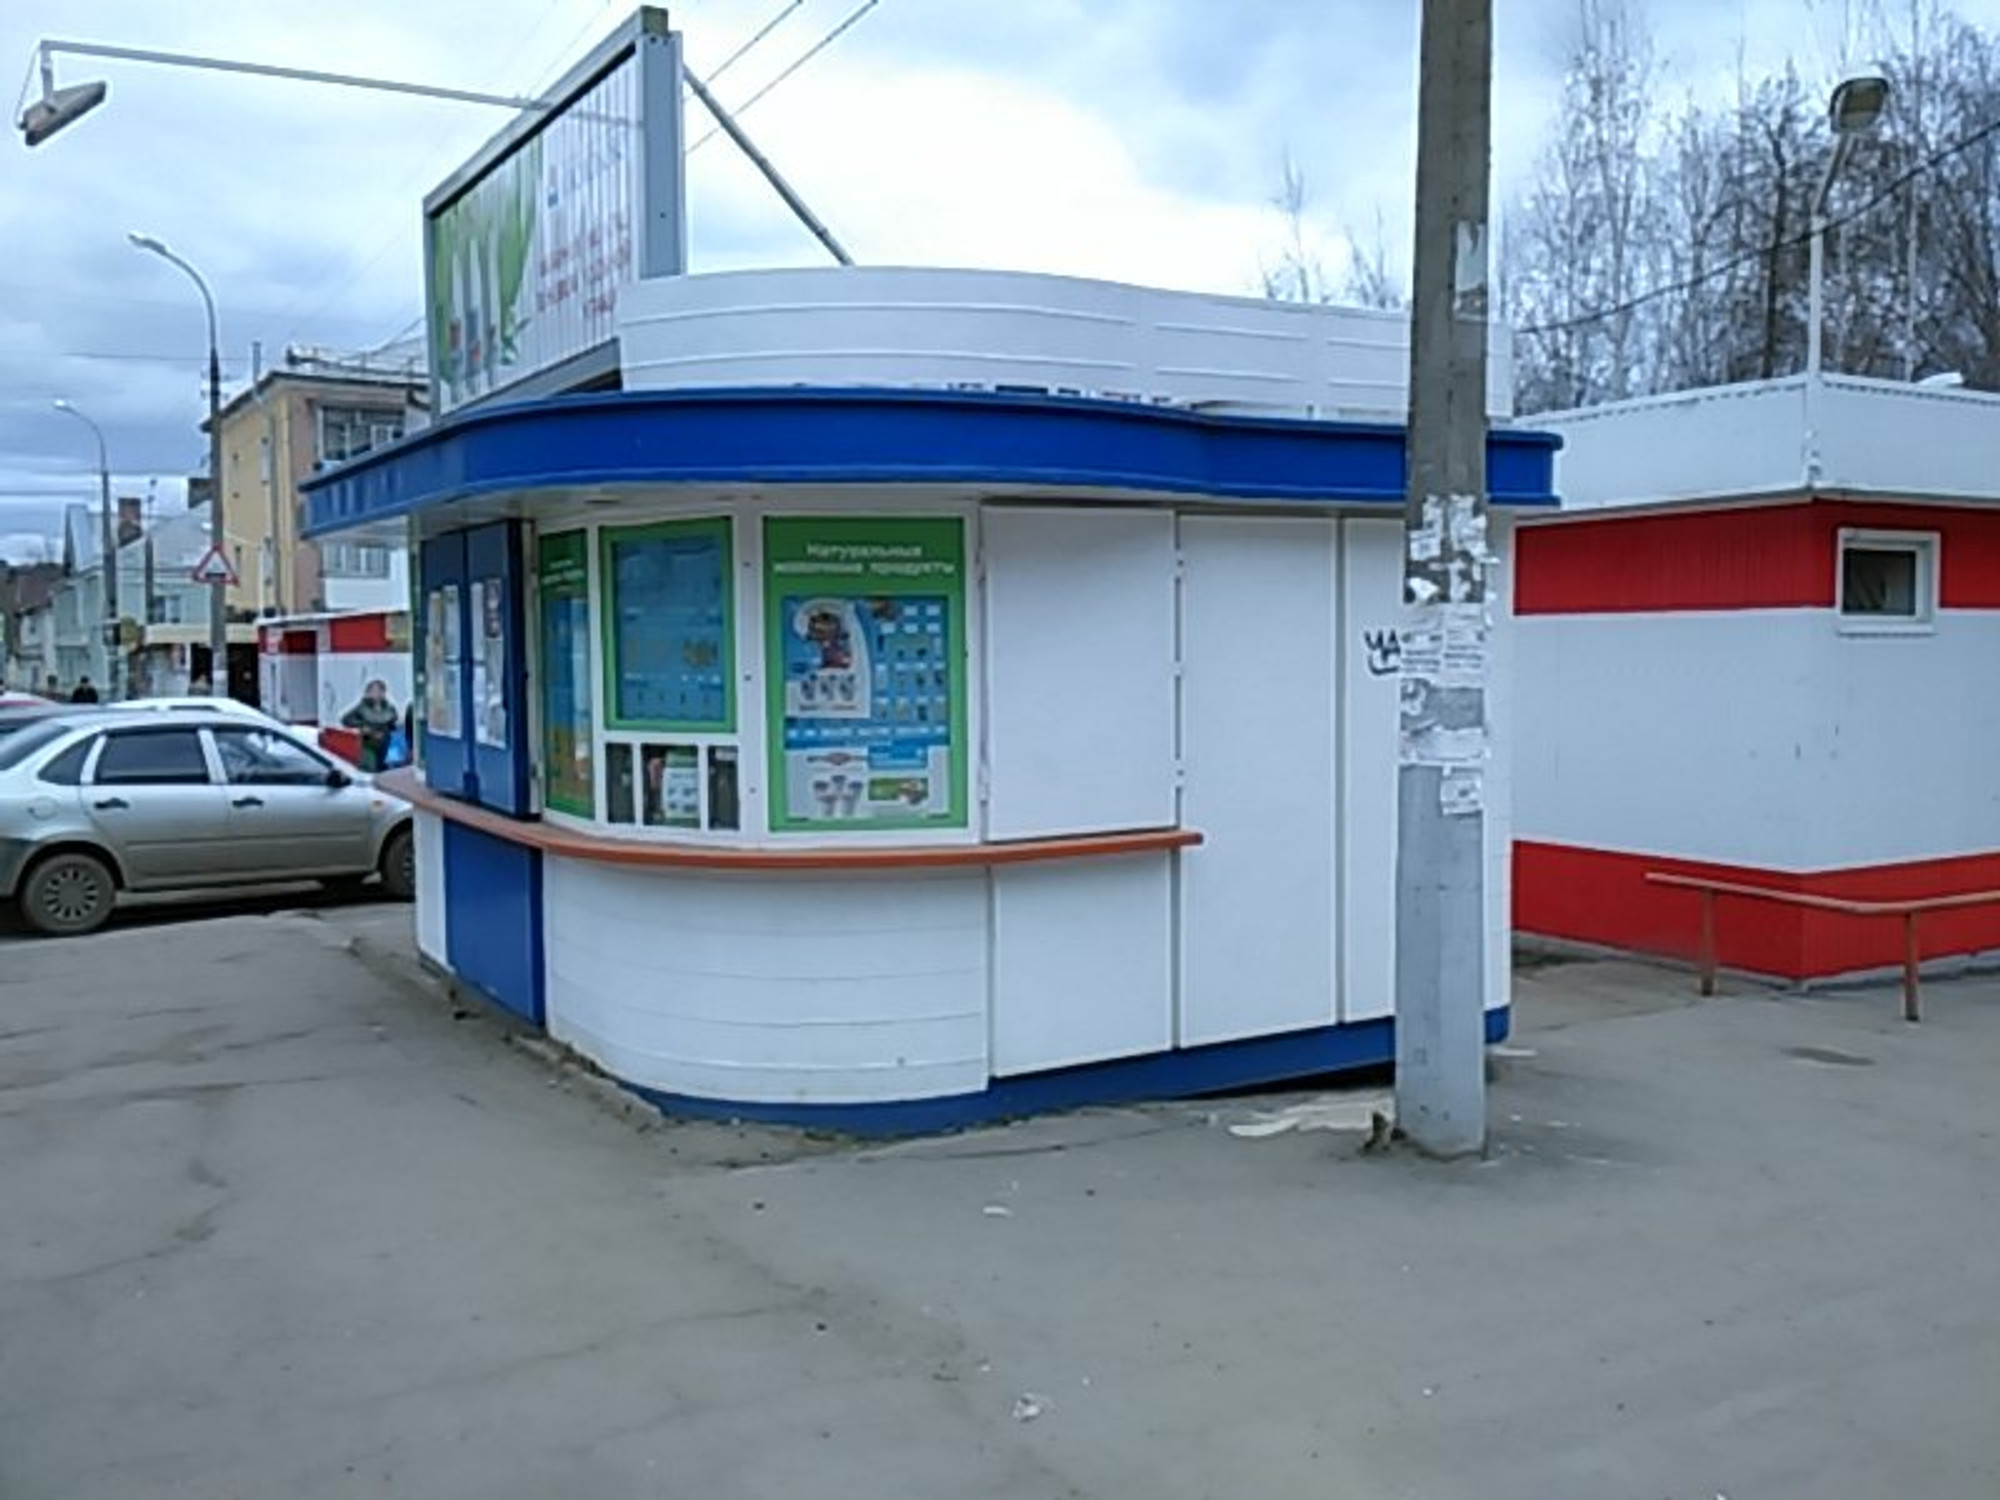 Ижмолоко (Молочный магазин)